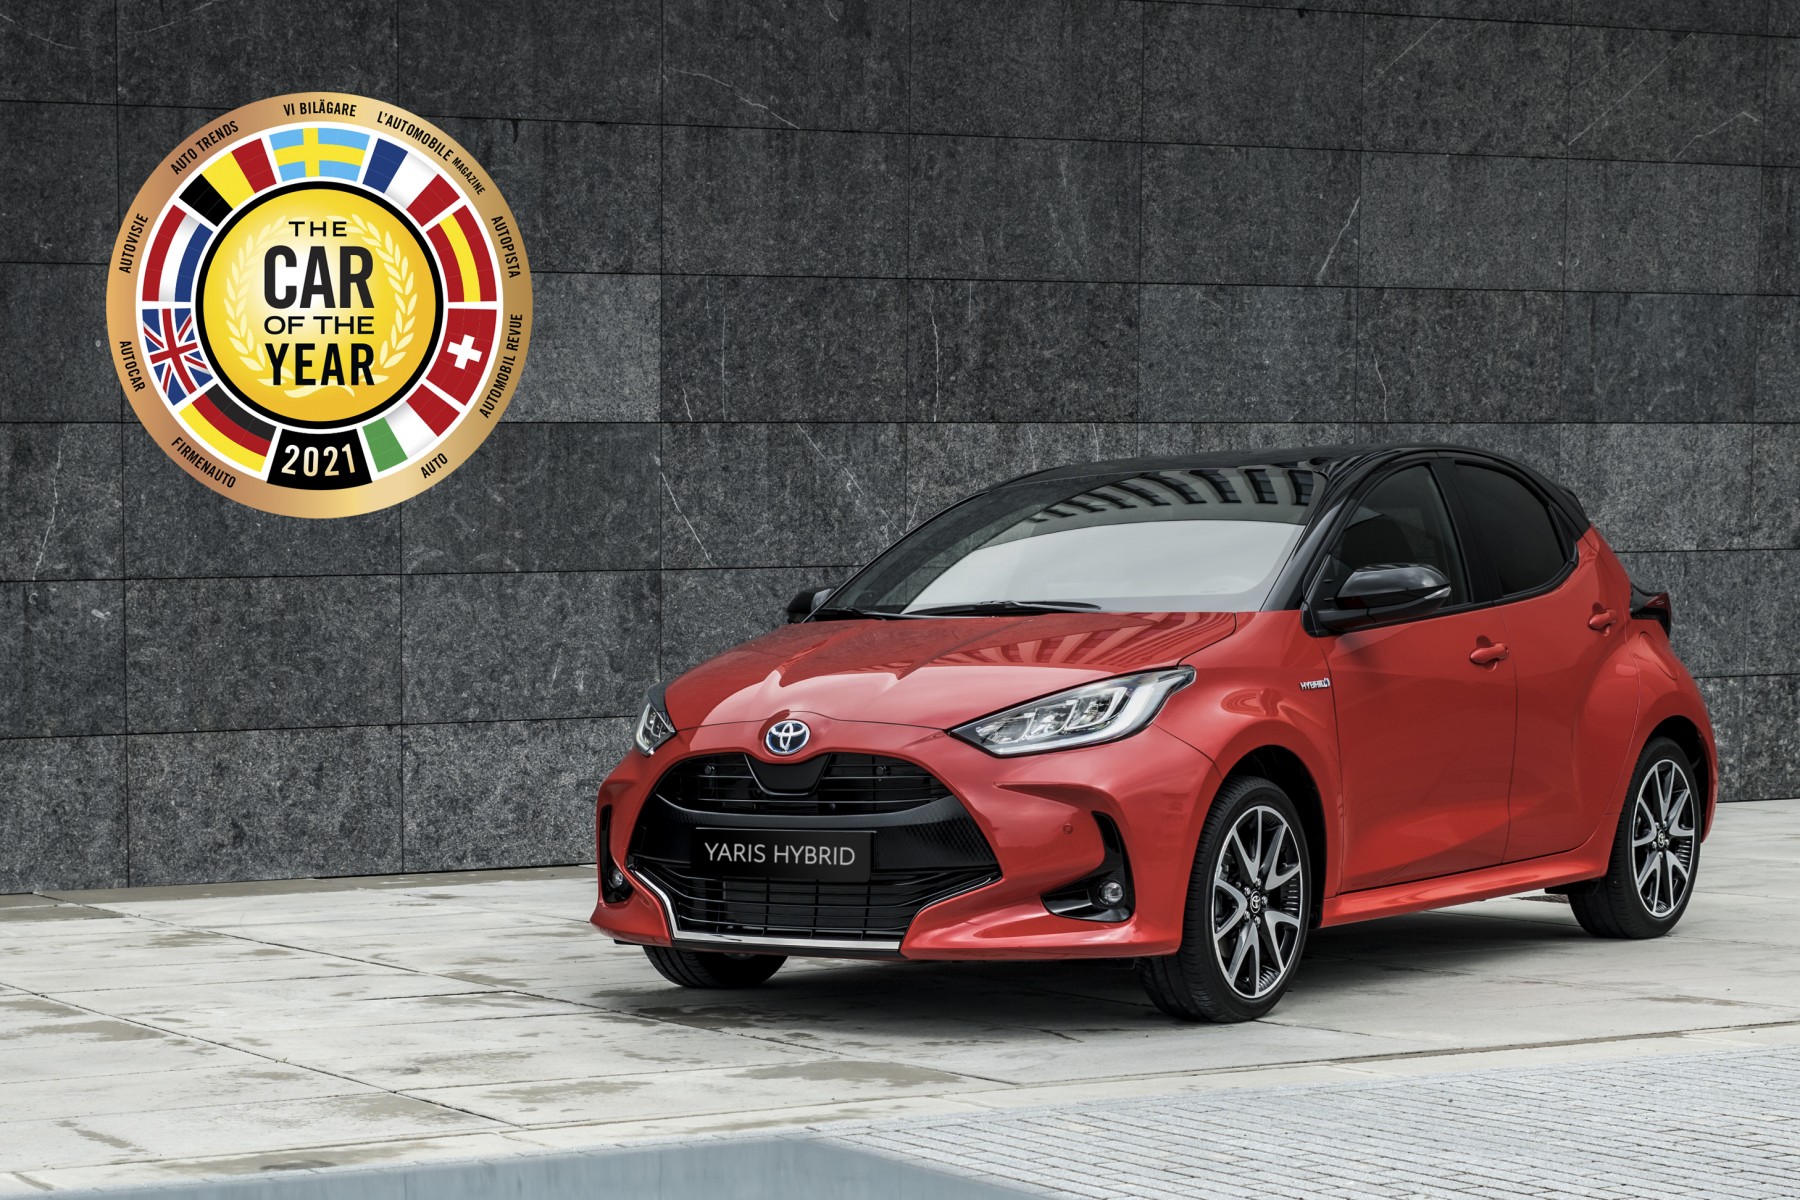 image-of-Toyota-Yaris-wins-car-of-the-year-award-2021